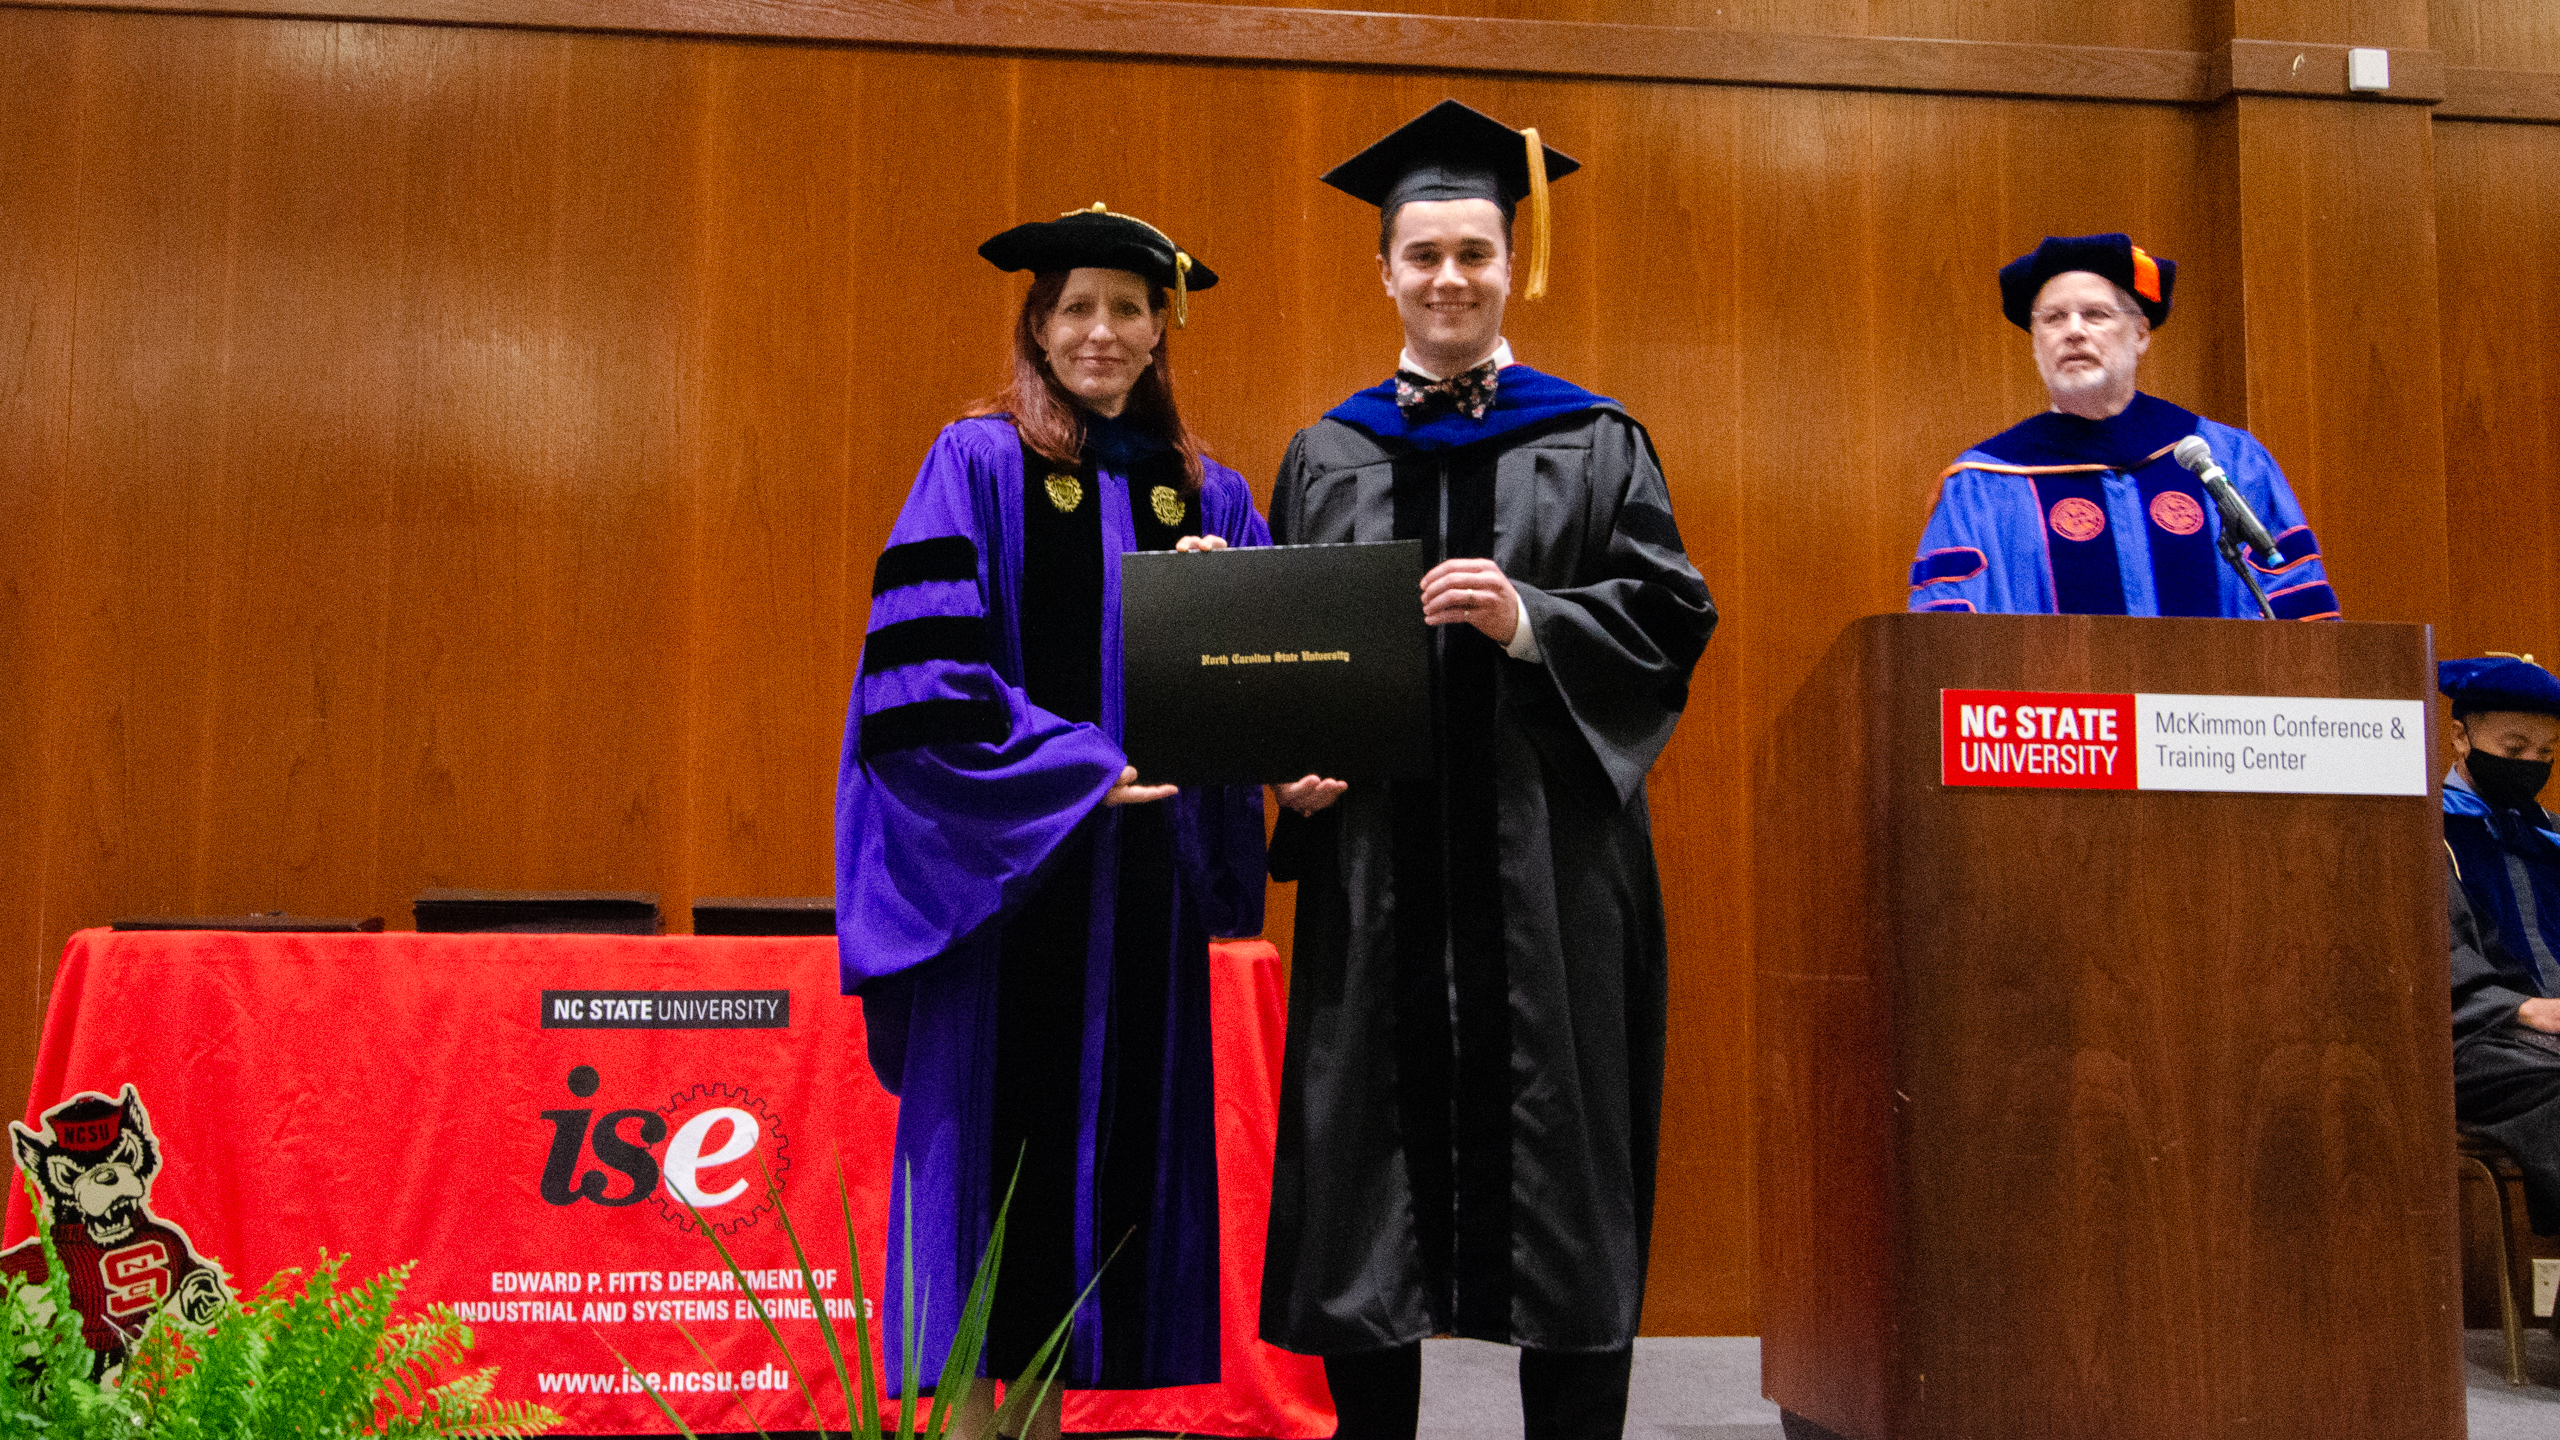 Gregory Hauser receiving his diploma